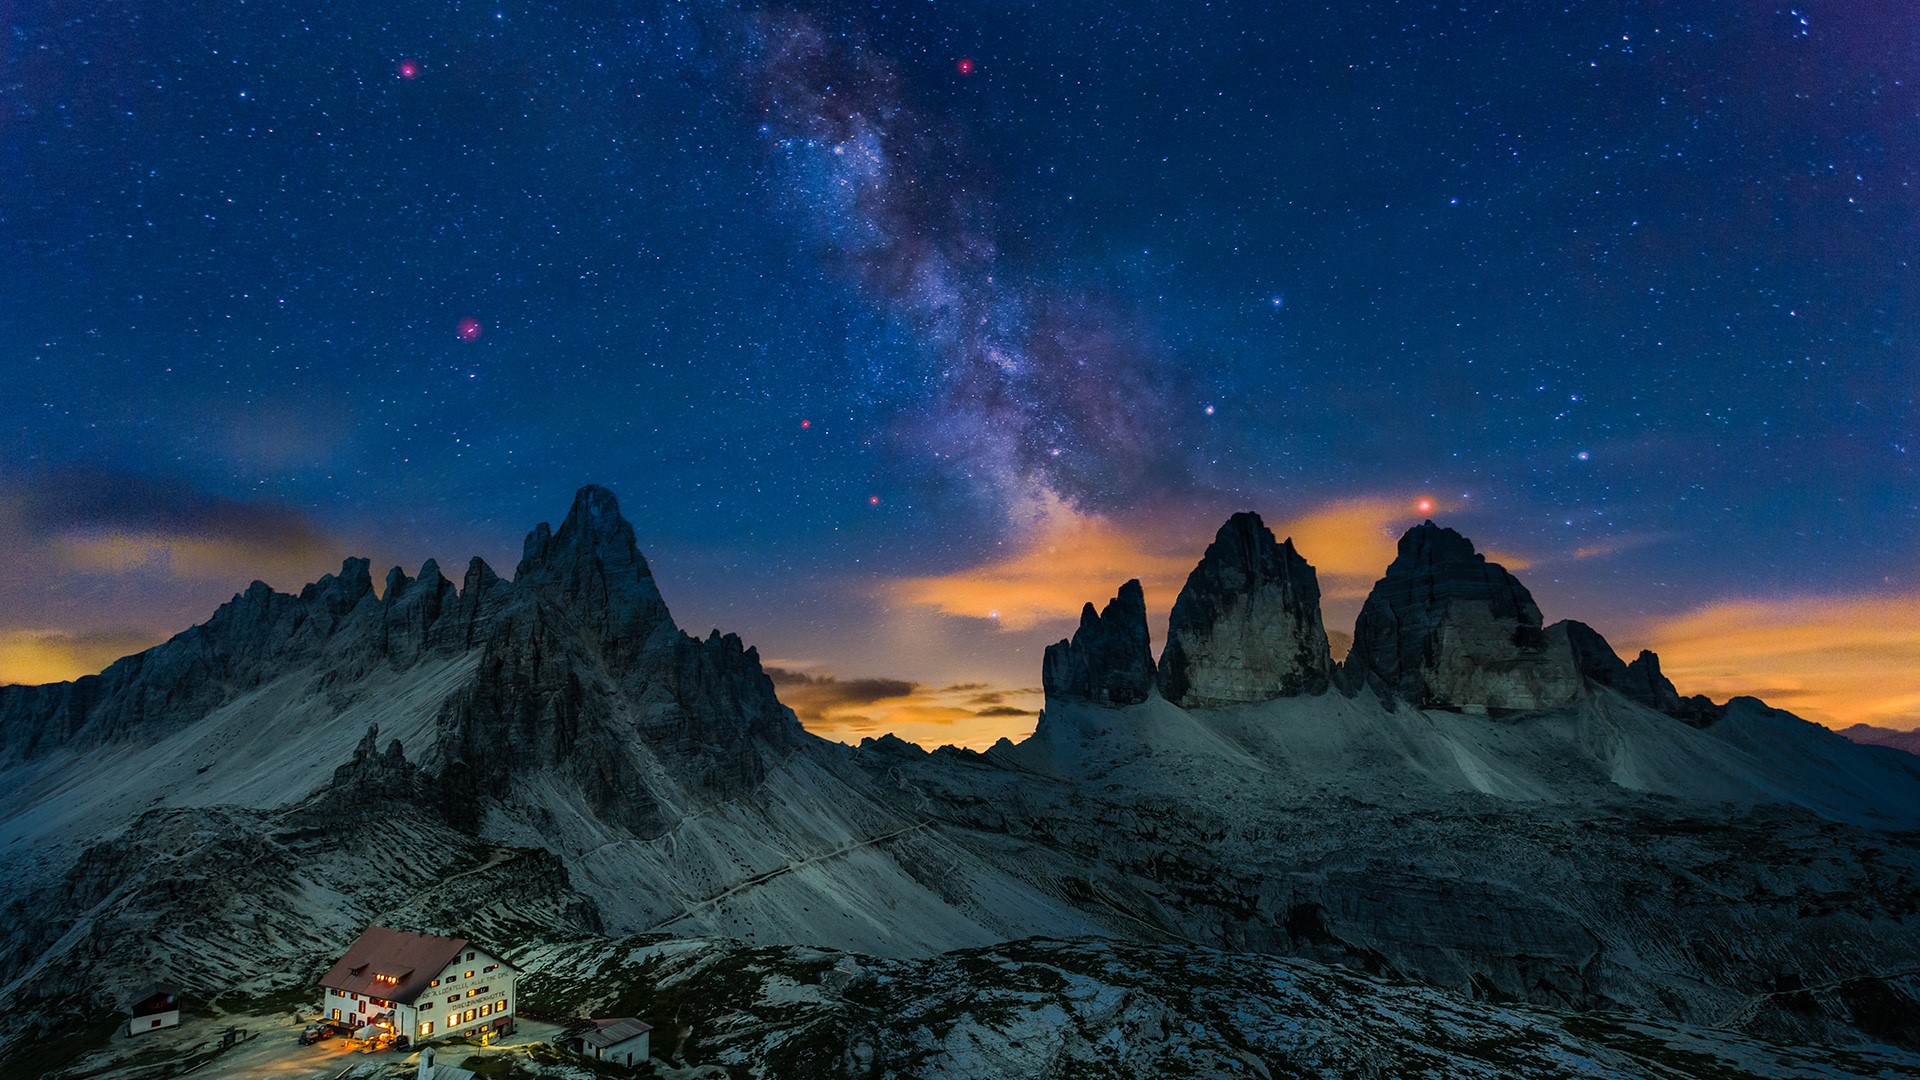 General 1920x1080 Milky Way stars Italy mountains snow house Dolomites